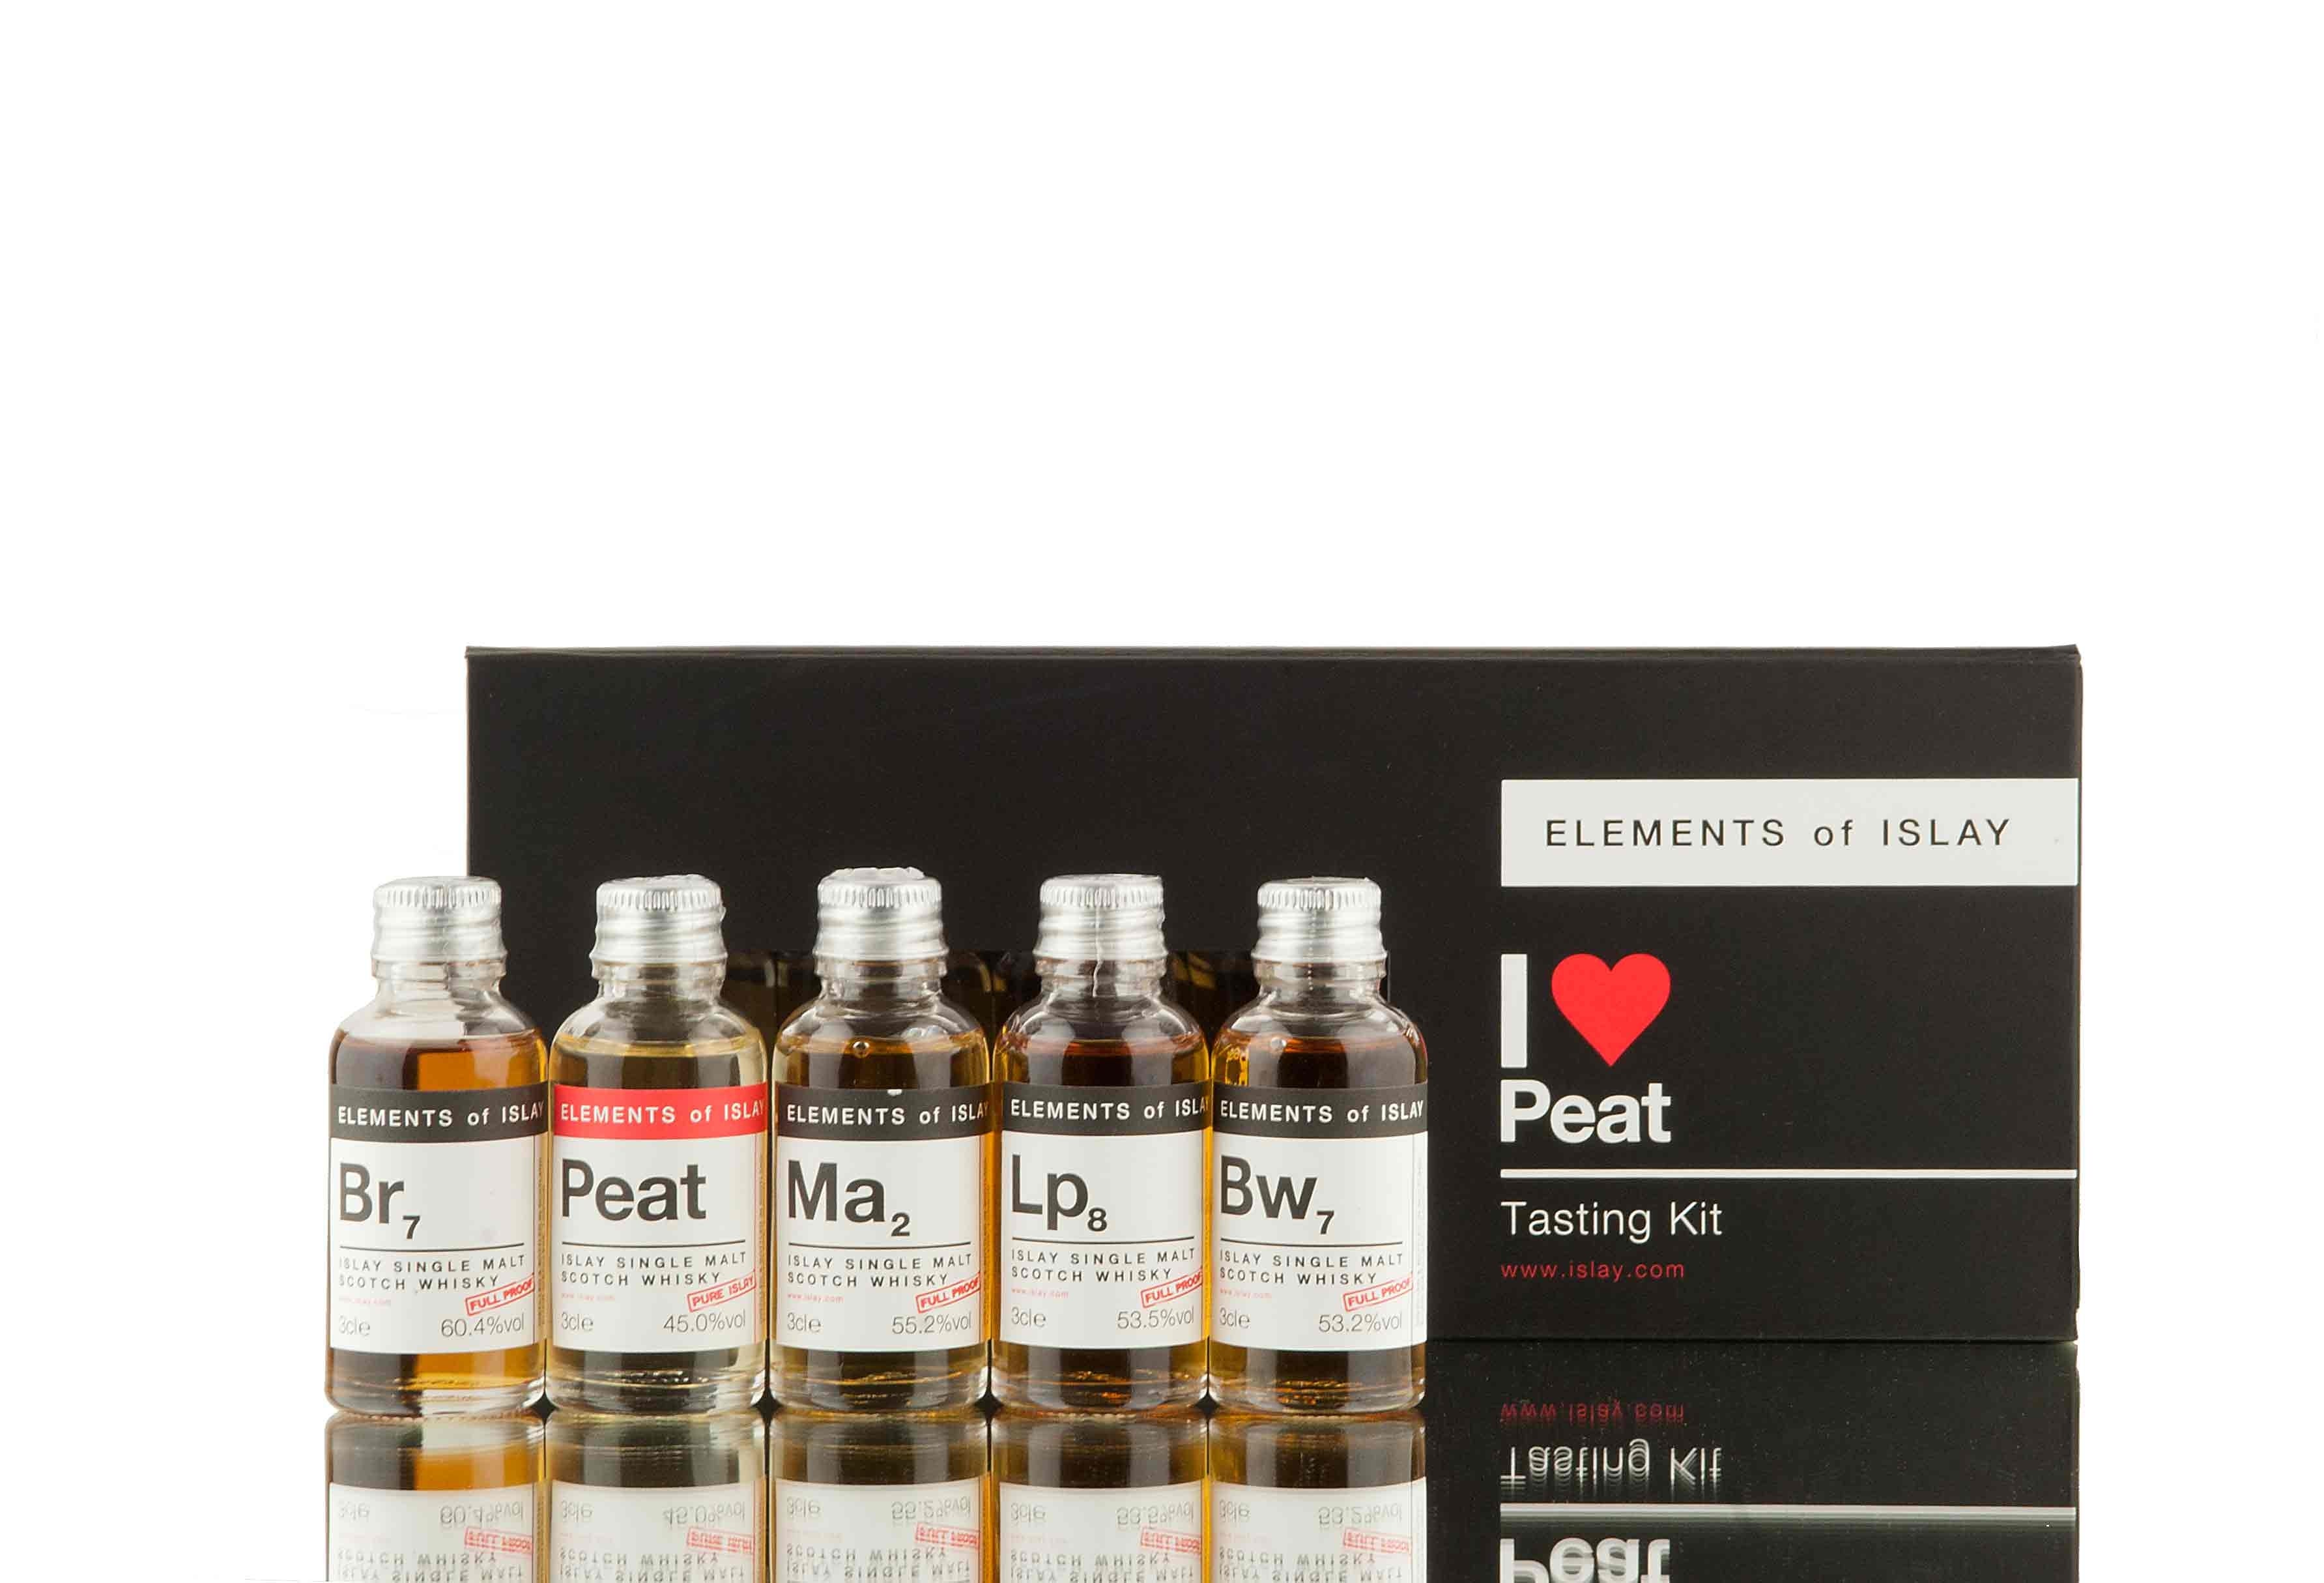 Elements of Islay - I Love Peat Tasting Kit